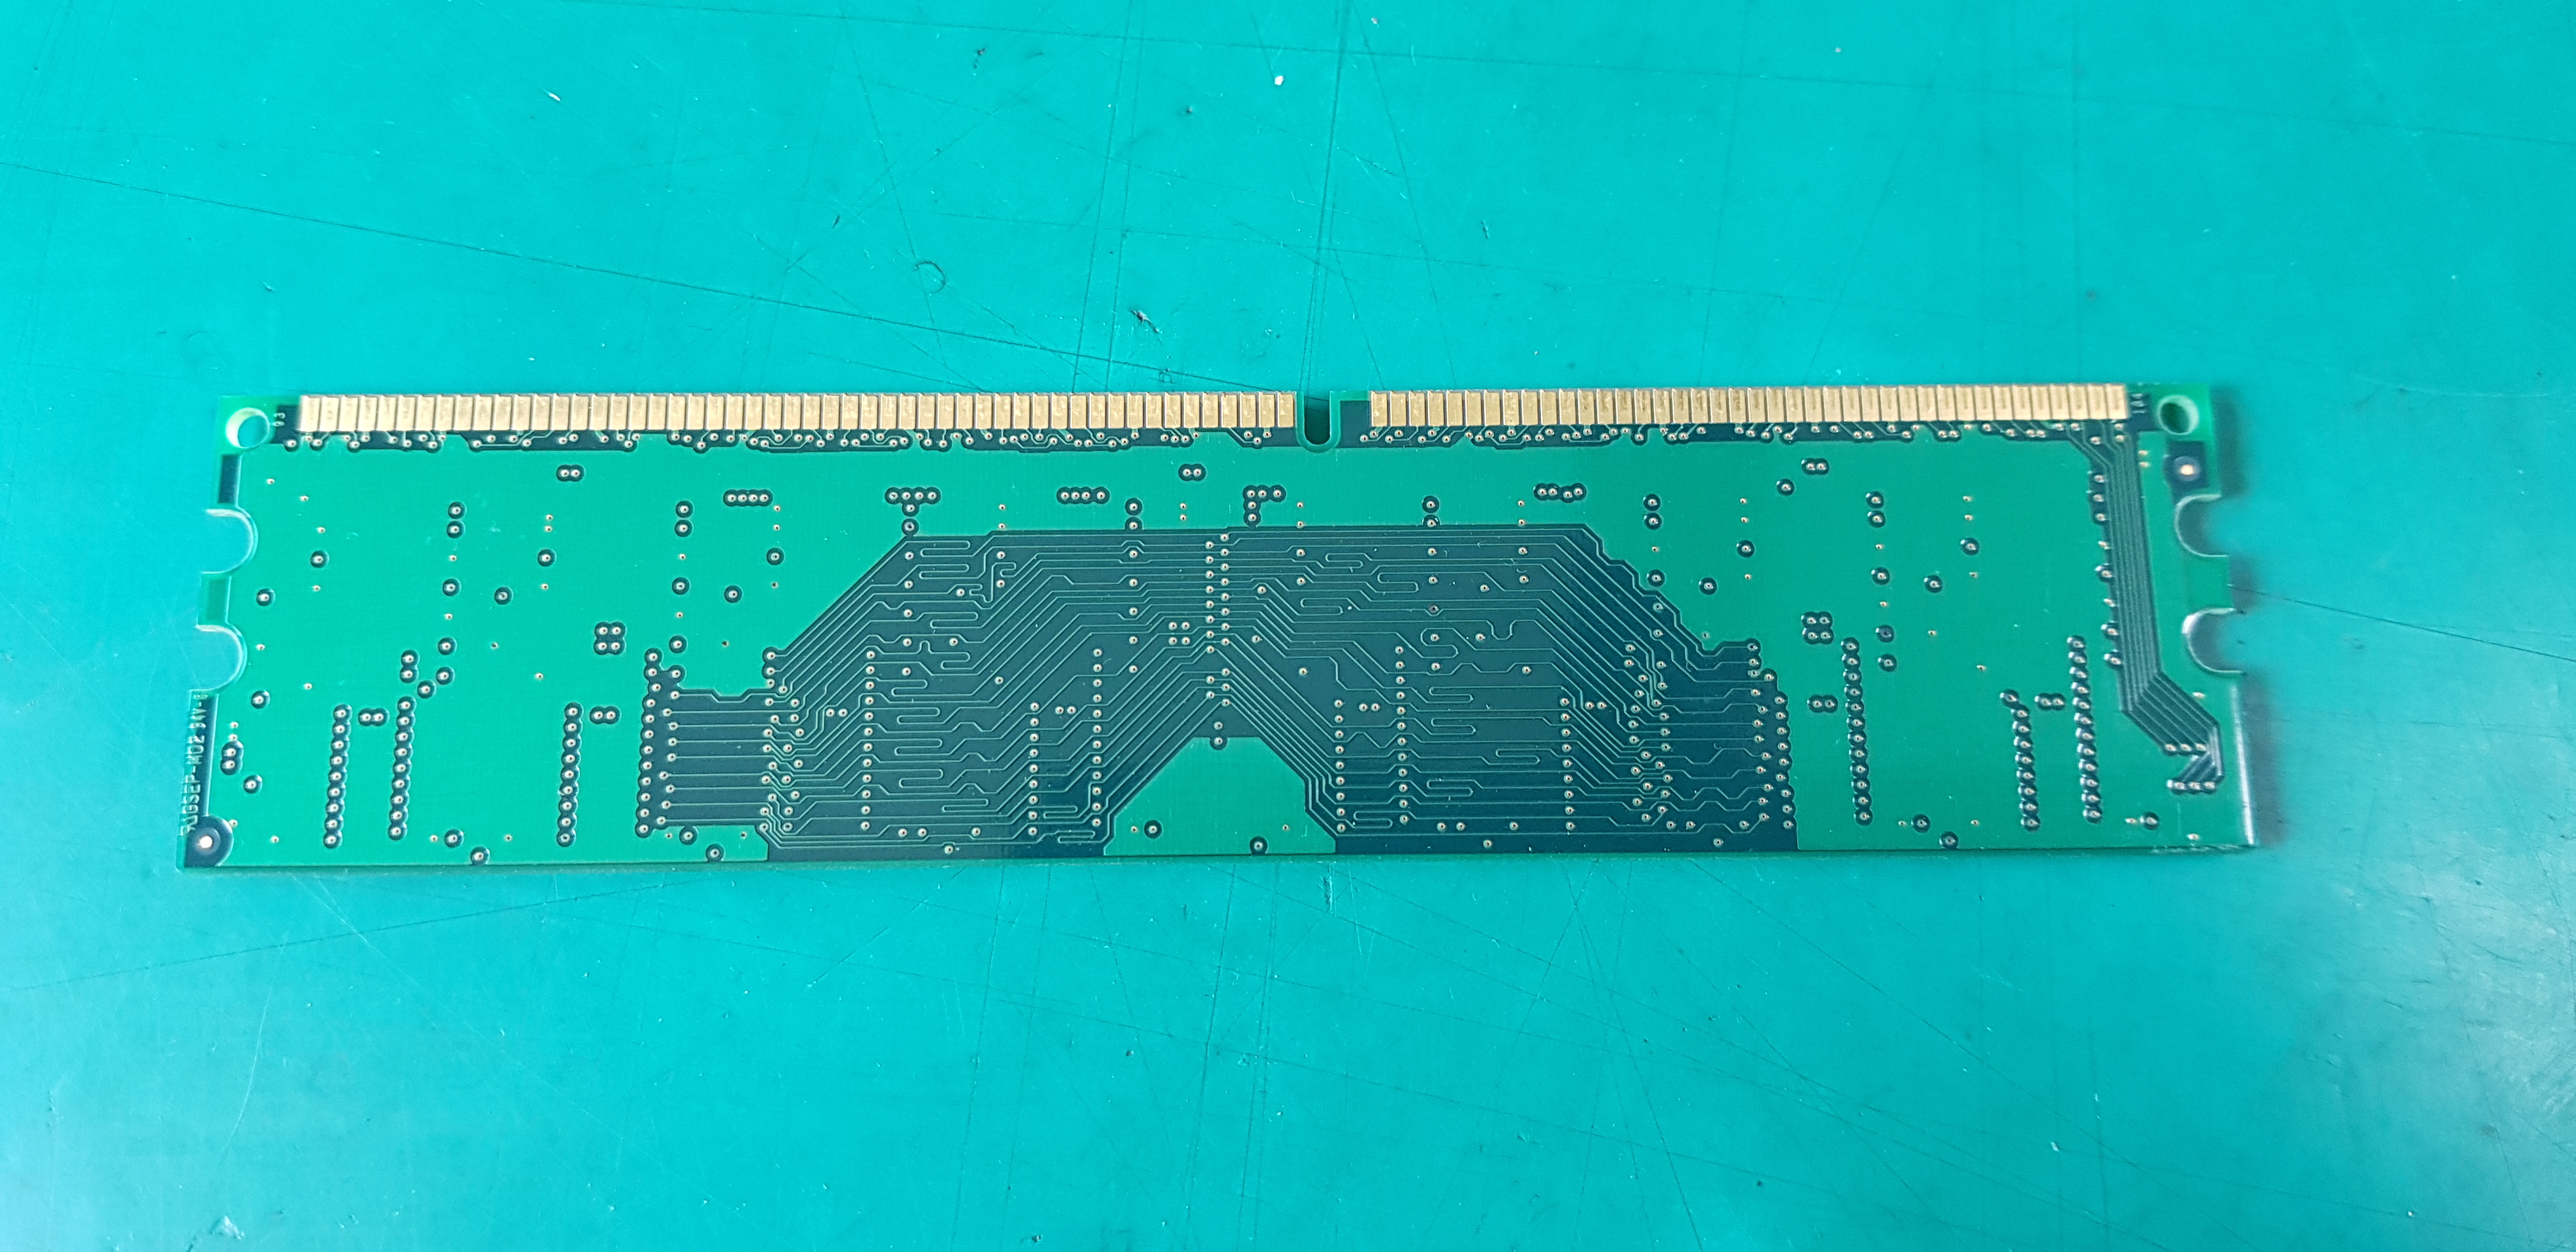 MEMORY 256MB DDR PC3200U (중고)